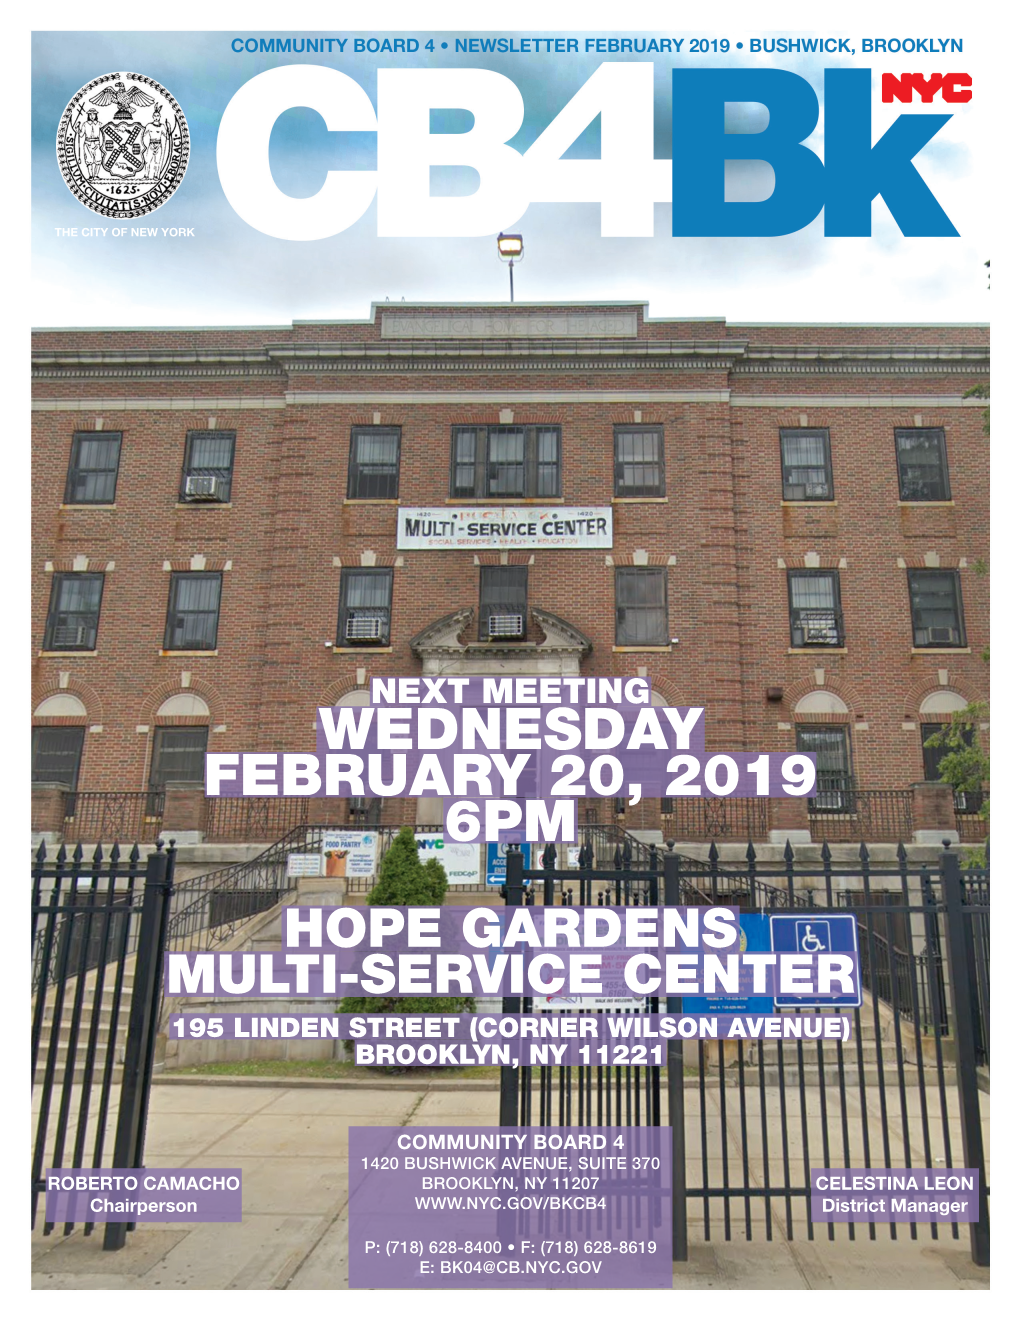 Wednesday February 20, 2019 6Pm Hope Gardens Multi-Service Center 195 Linden Street (Corner Wilson Avenue) Brooklyn, Ny 11221